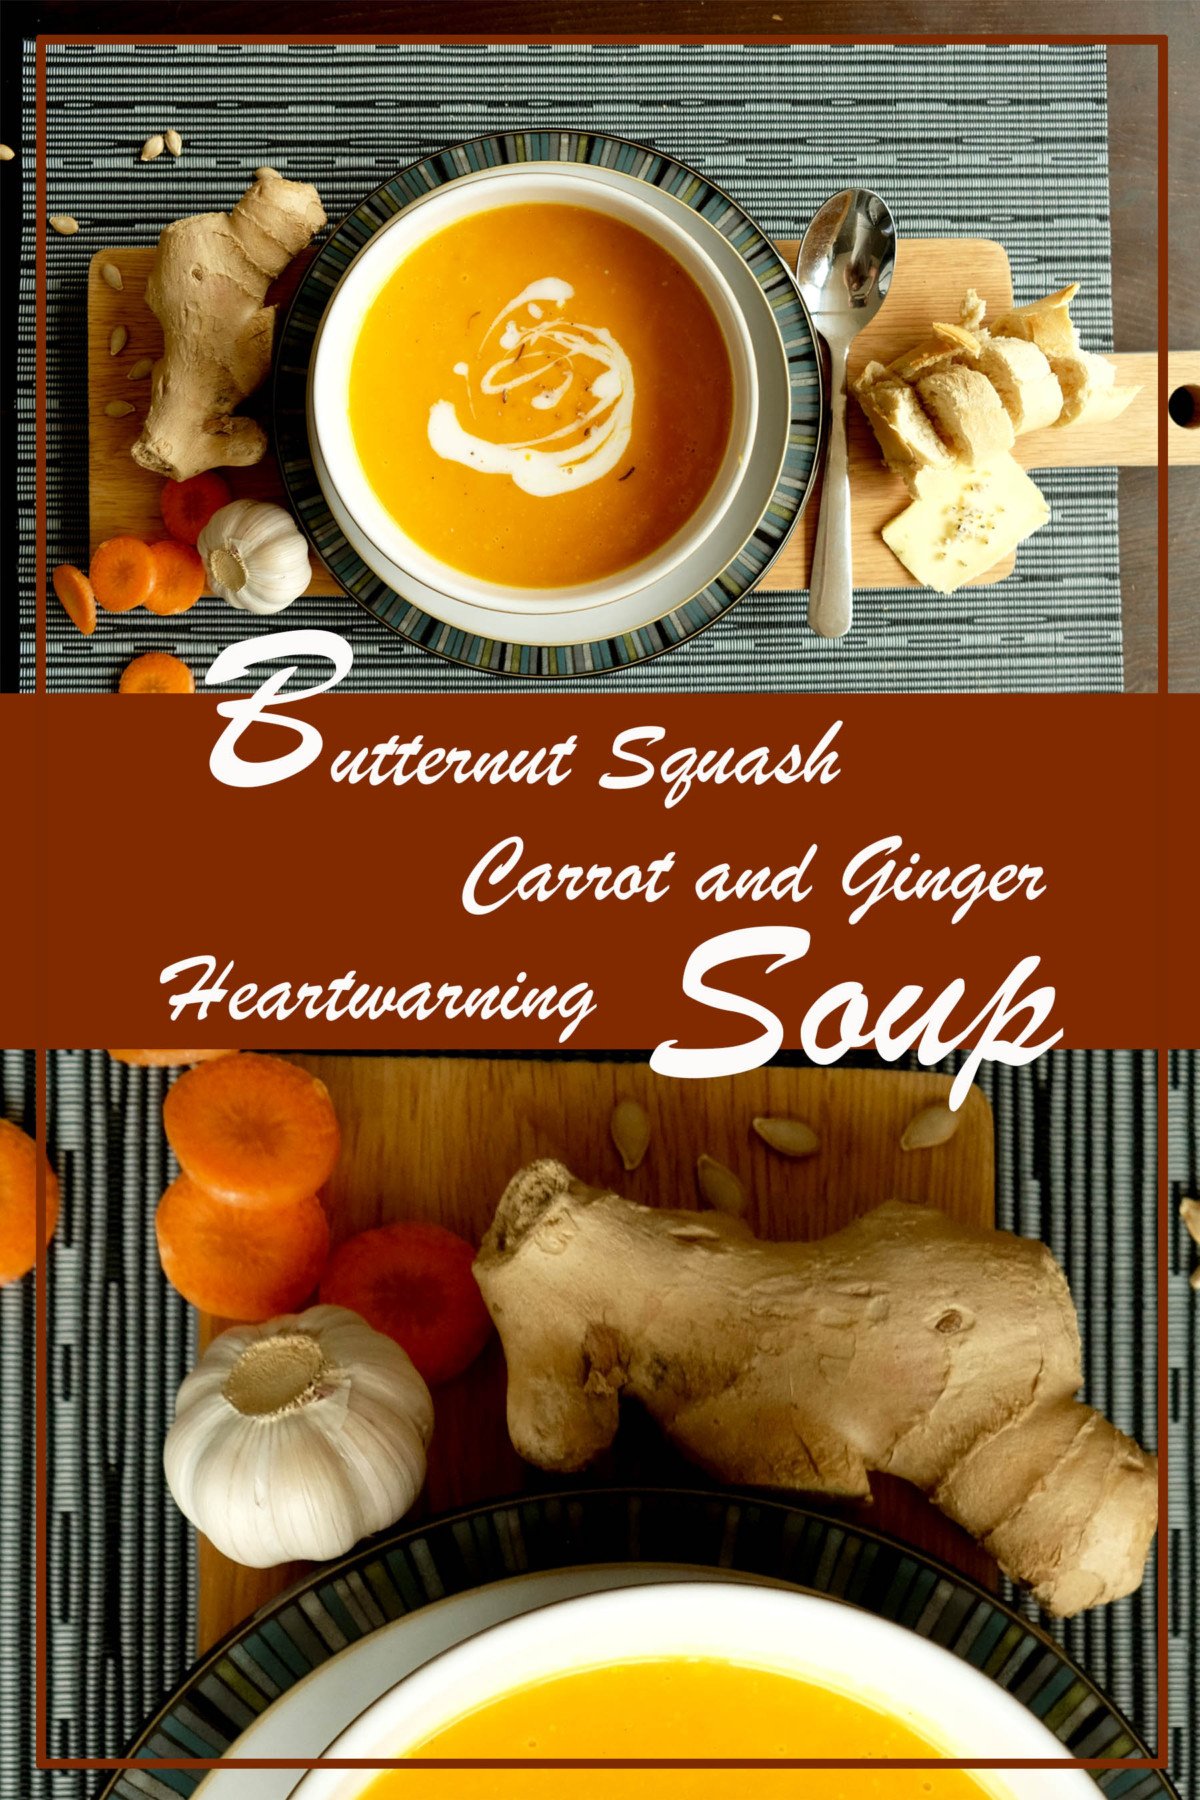 Heartwarming Butternut Squash, Carrot and Ginger Soup.